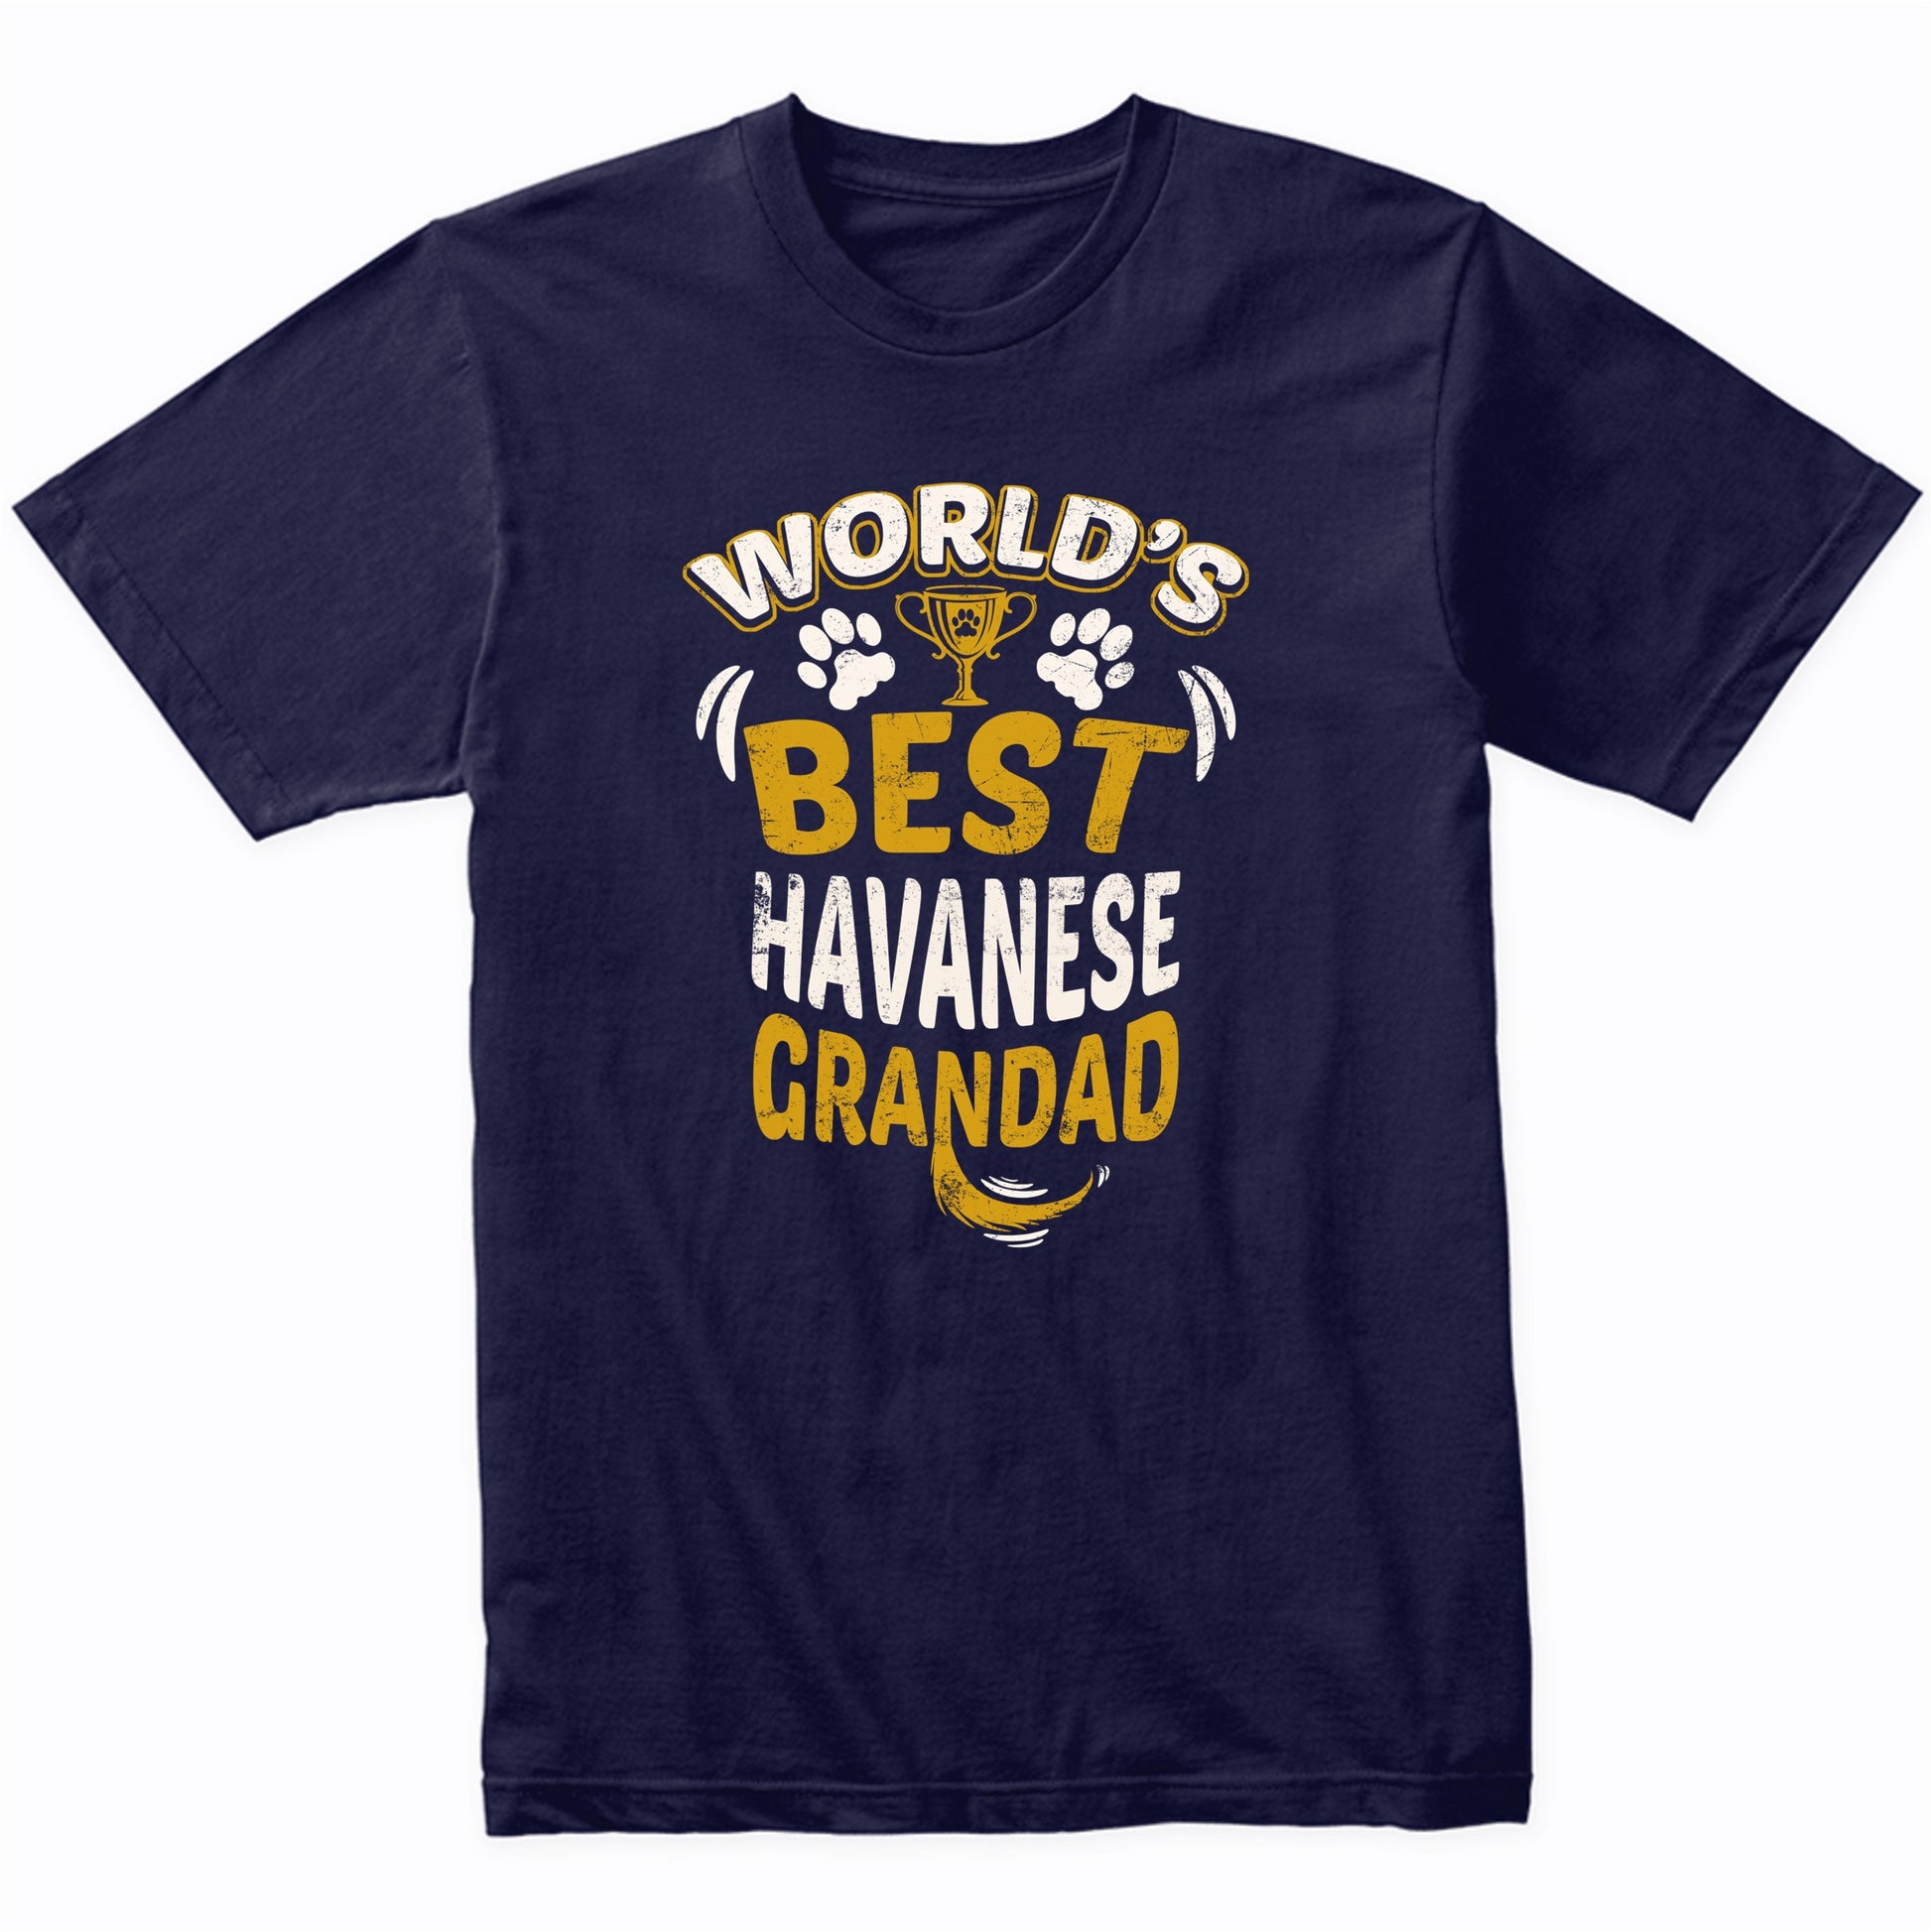 World's Best Havanese Grandad Graphic T-Shirt